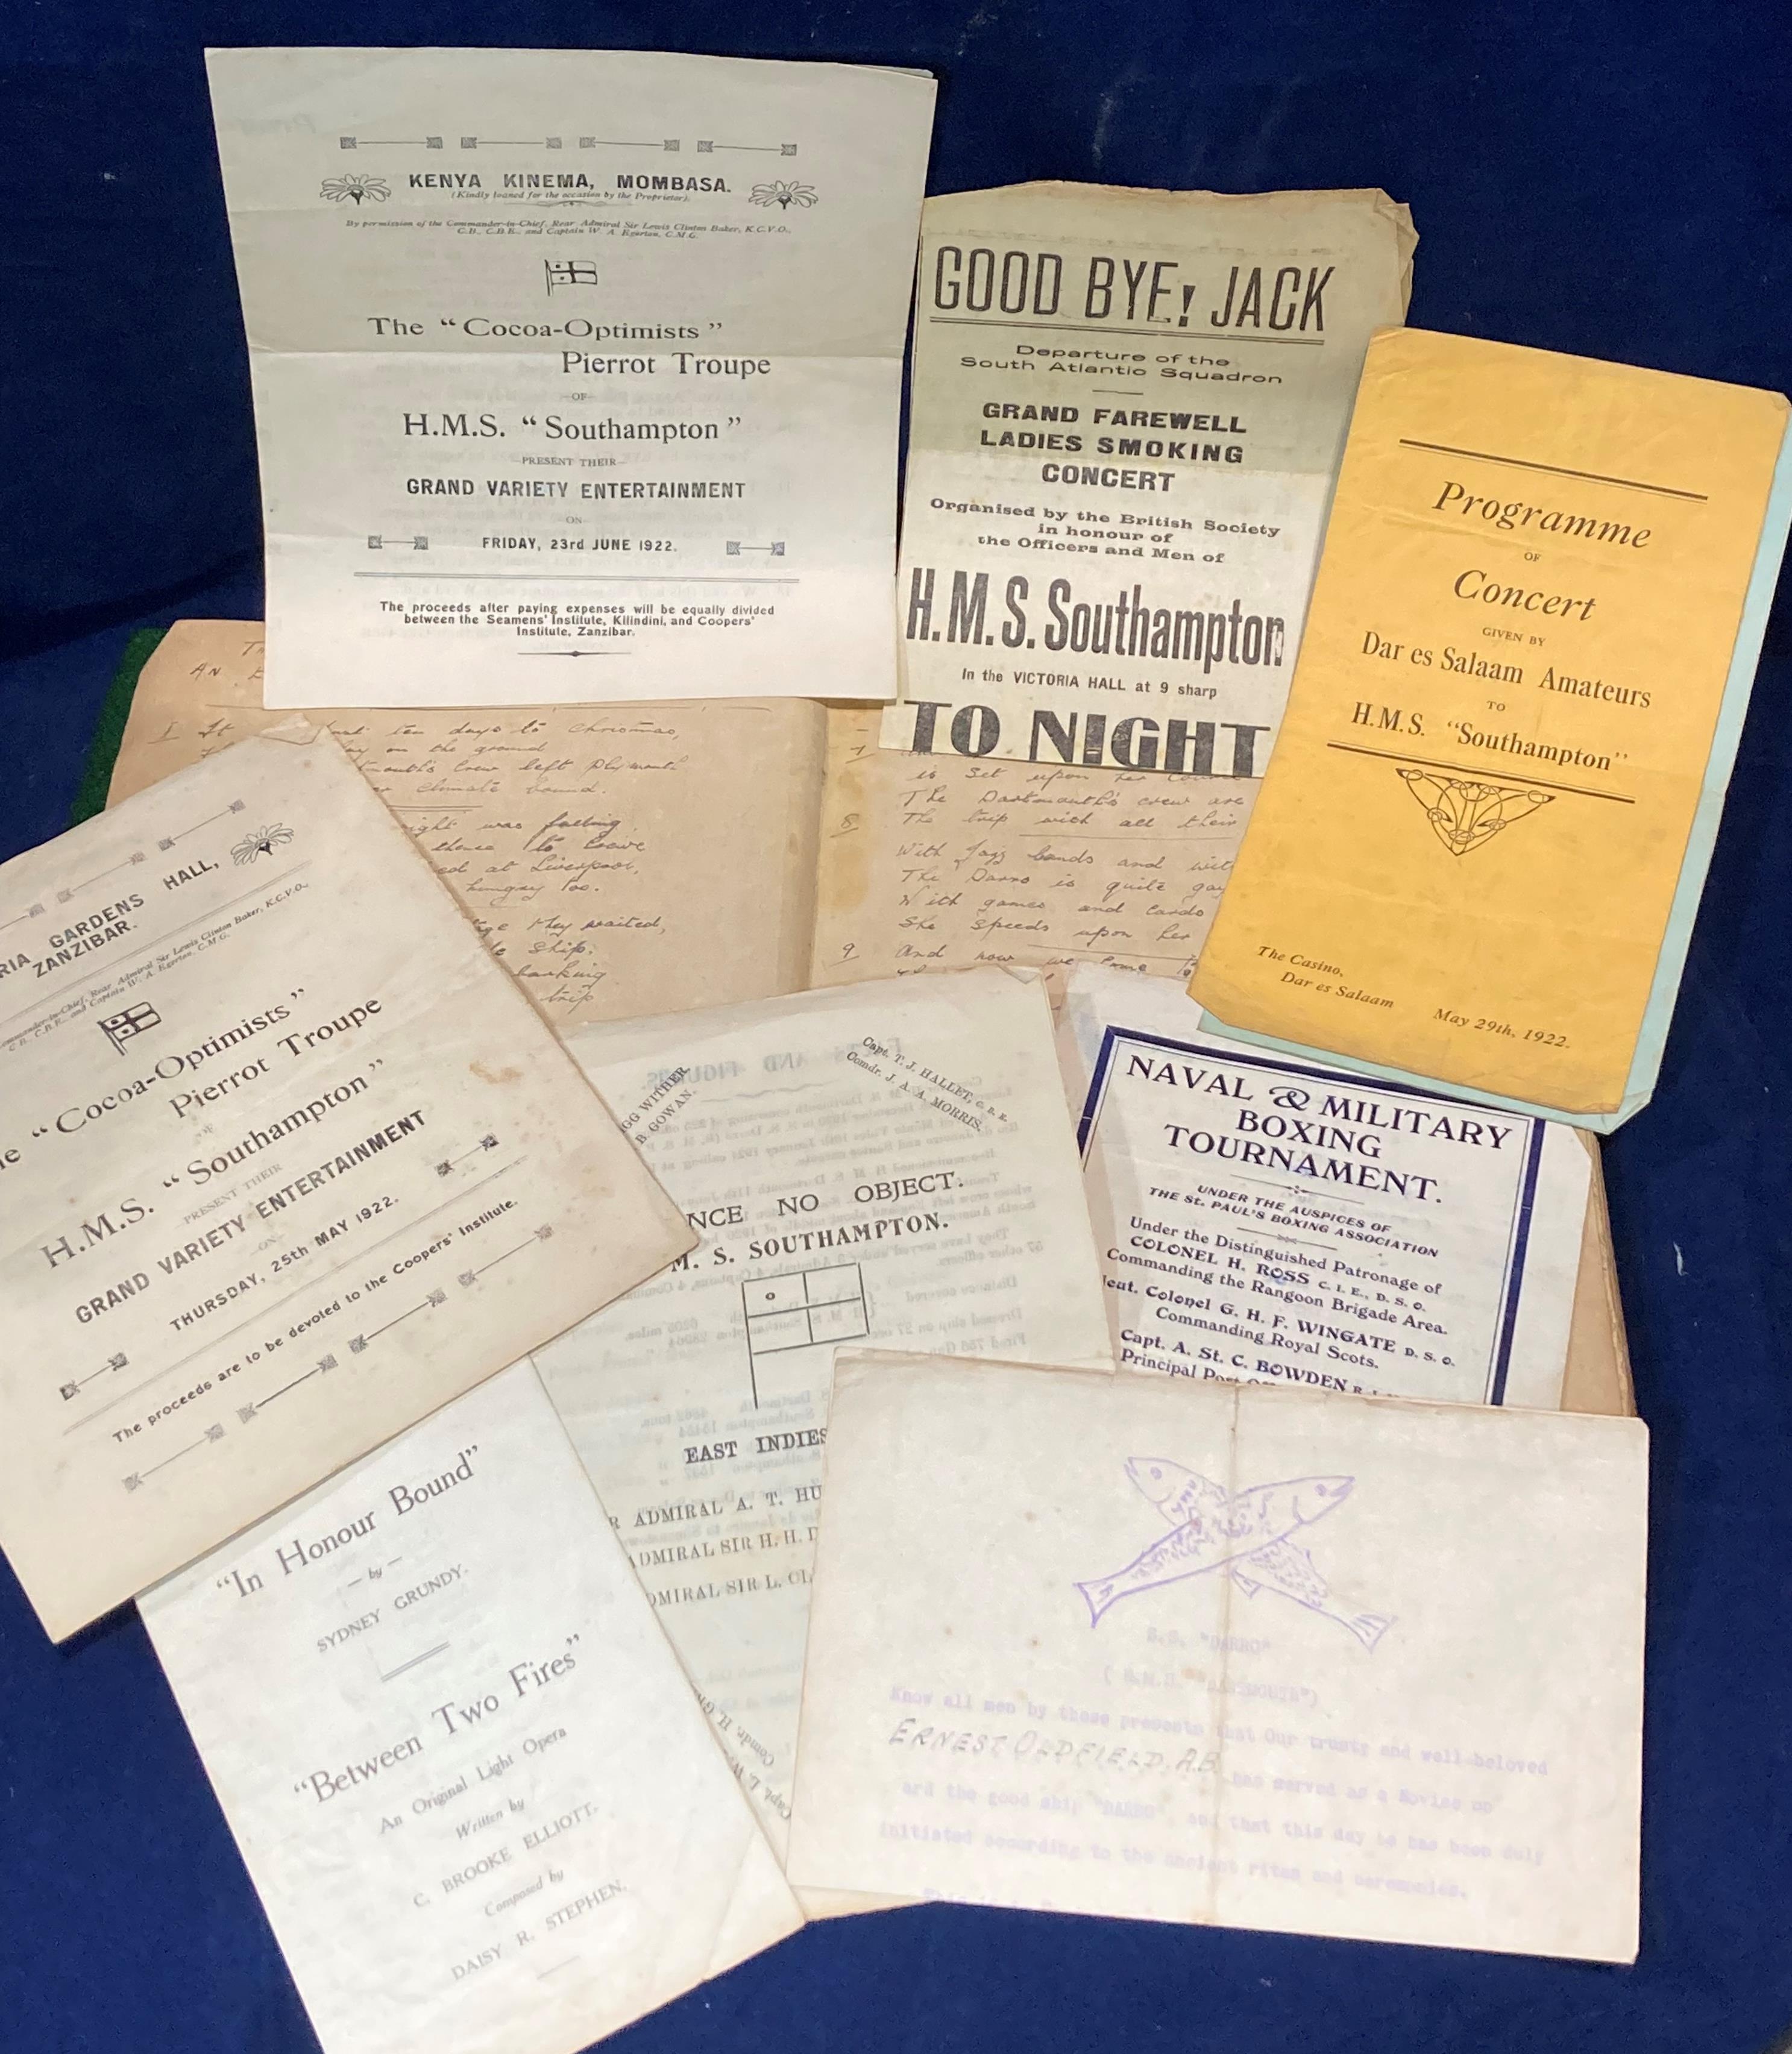 Maritime Ephemera - Seaman's Diary and related printed items - handwritten diary/log of Ernest